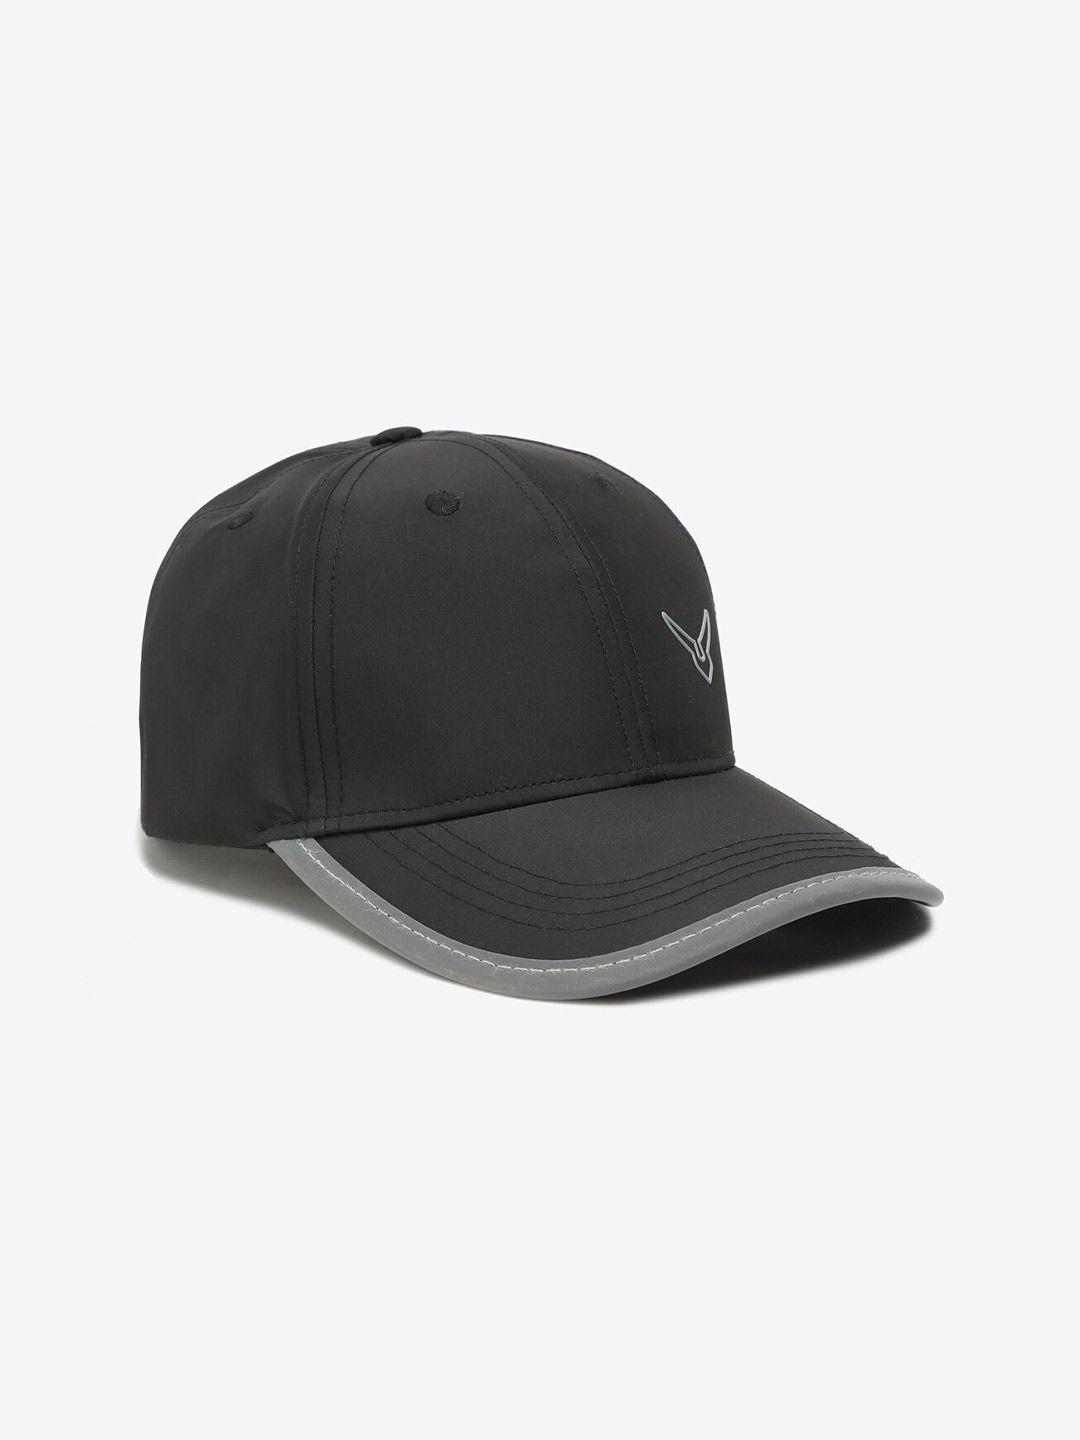 invincible unisex black & grey baseball cap